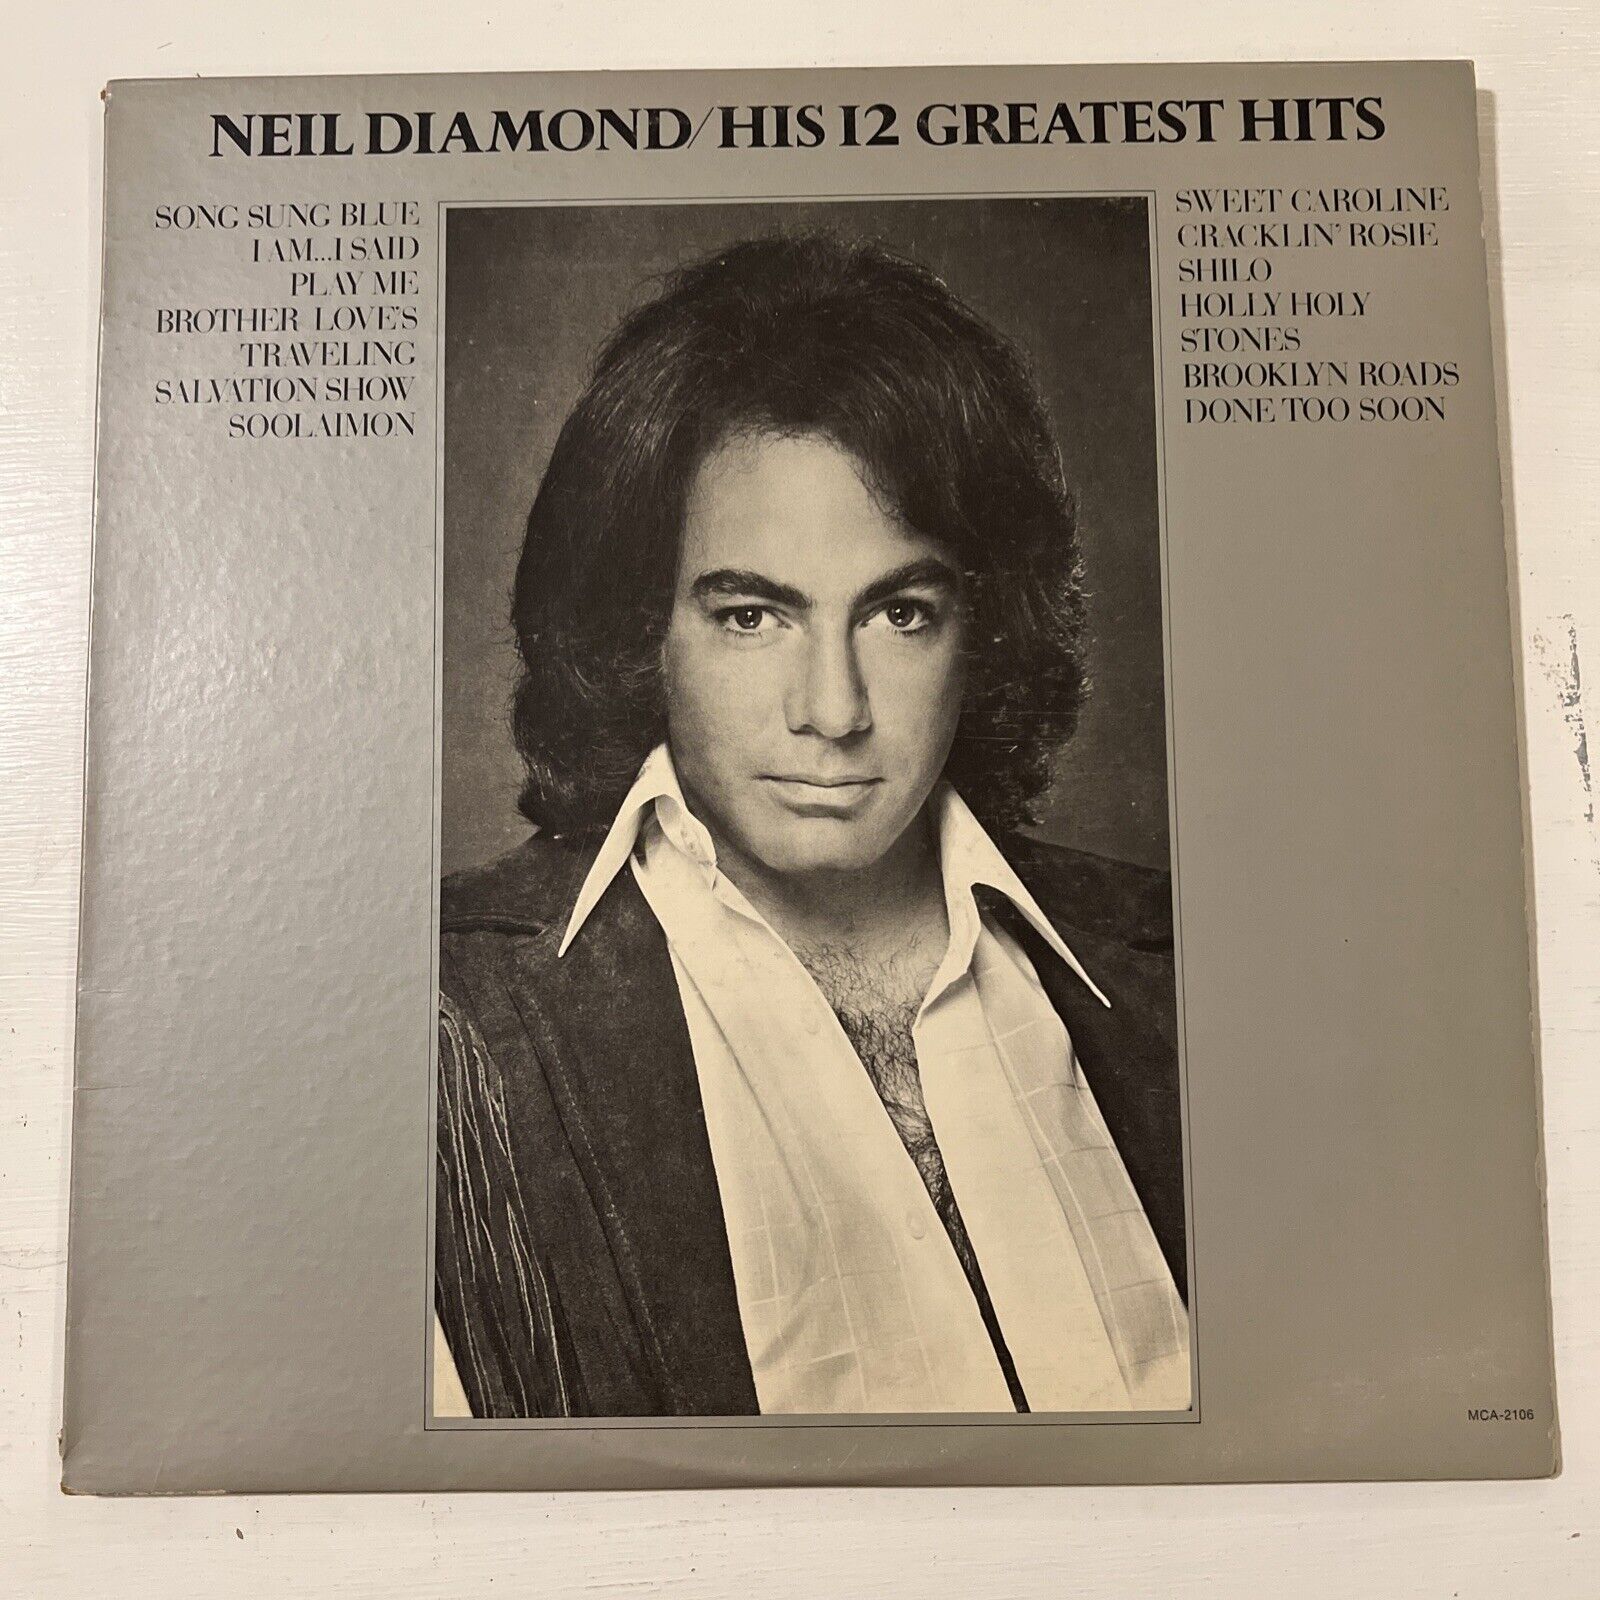 Neil Diamond ‎His 12 Greatest Hits Vinyl LP 1974 MCA Records ‎MCA-2106 EX/VG+